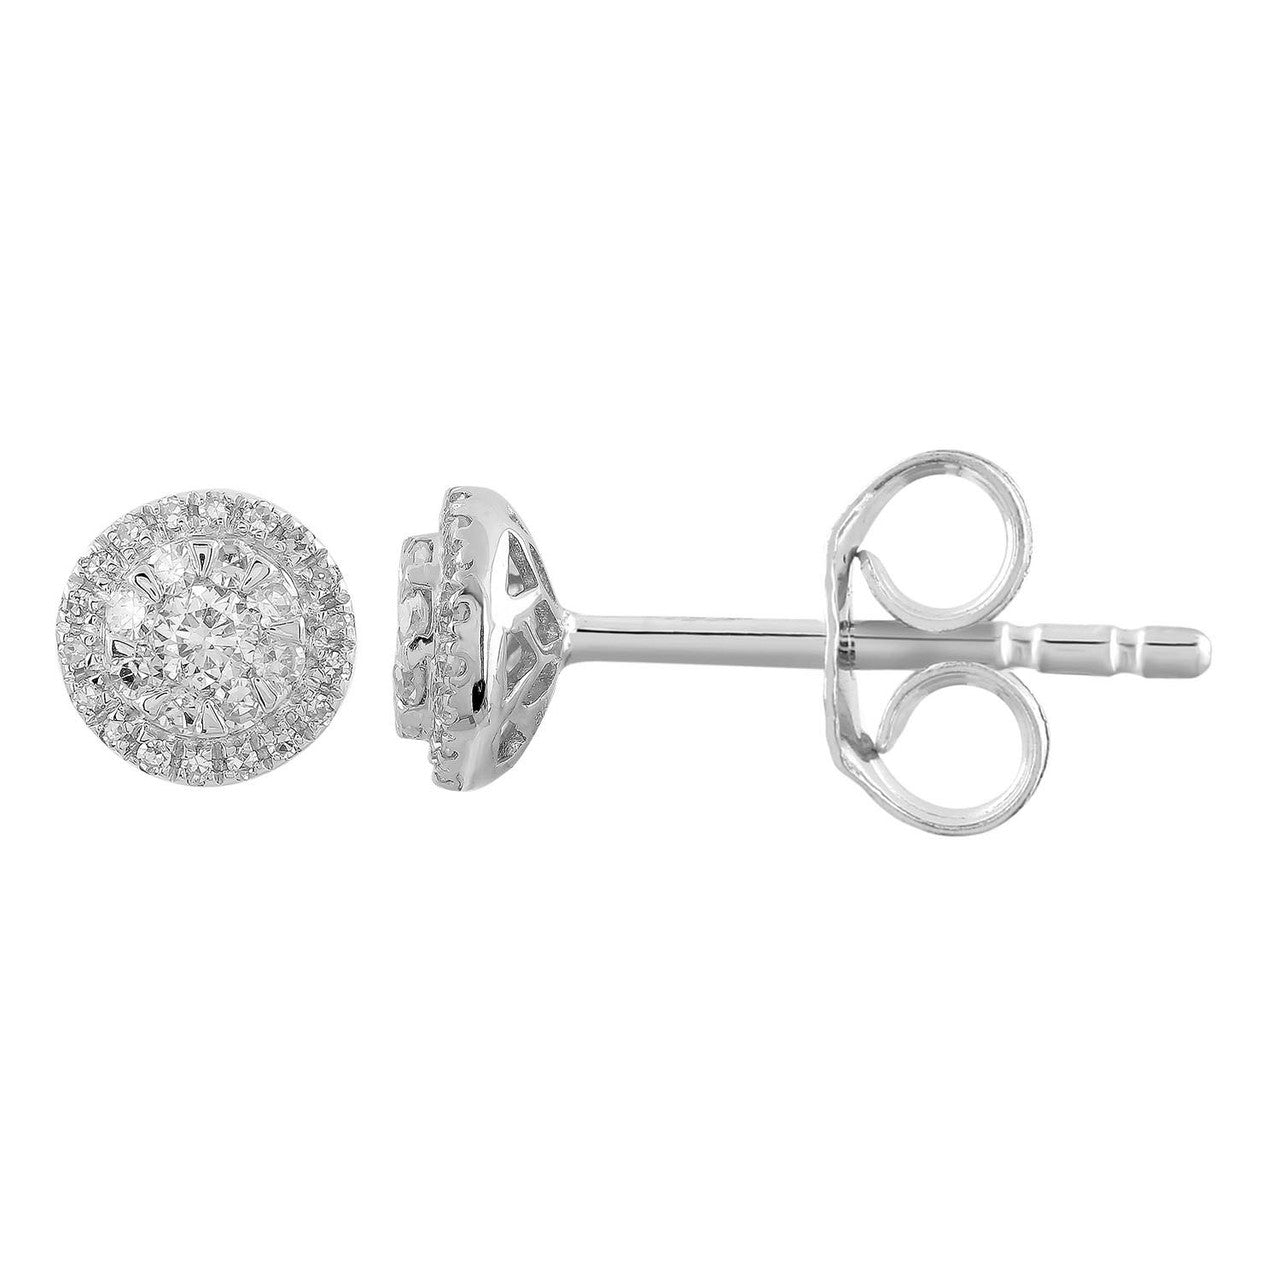 Ice Jewellery Stud Earrings with 0.25ct Diamonds in 9K White Gold | Ice Jewellery Australia